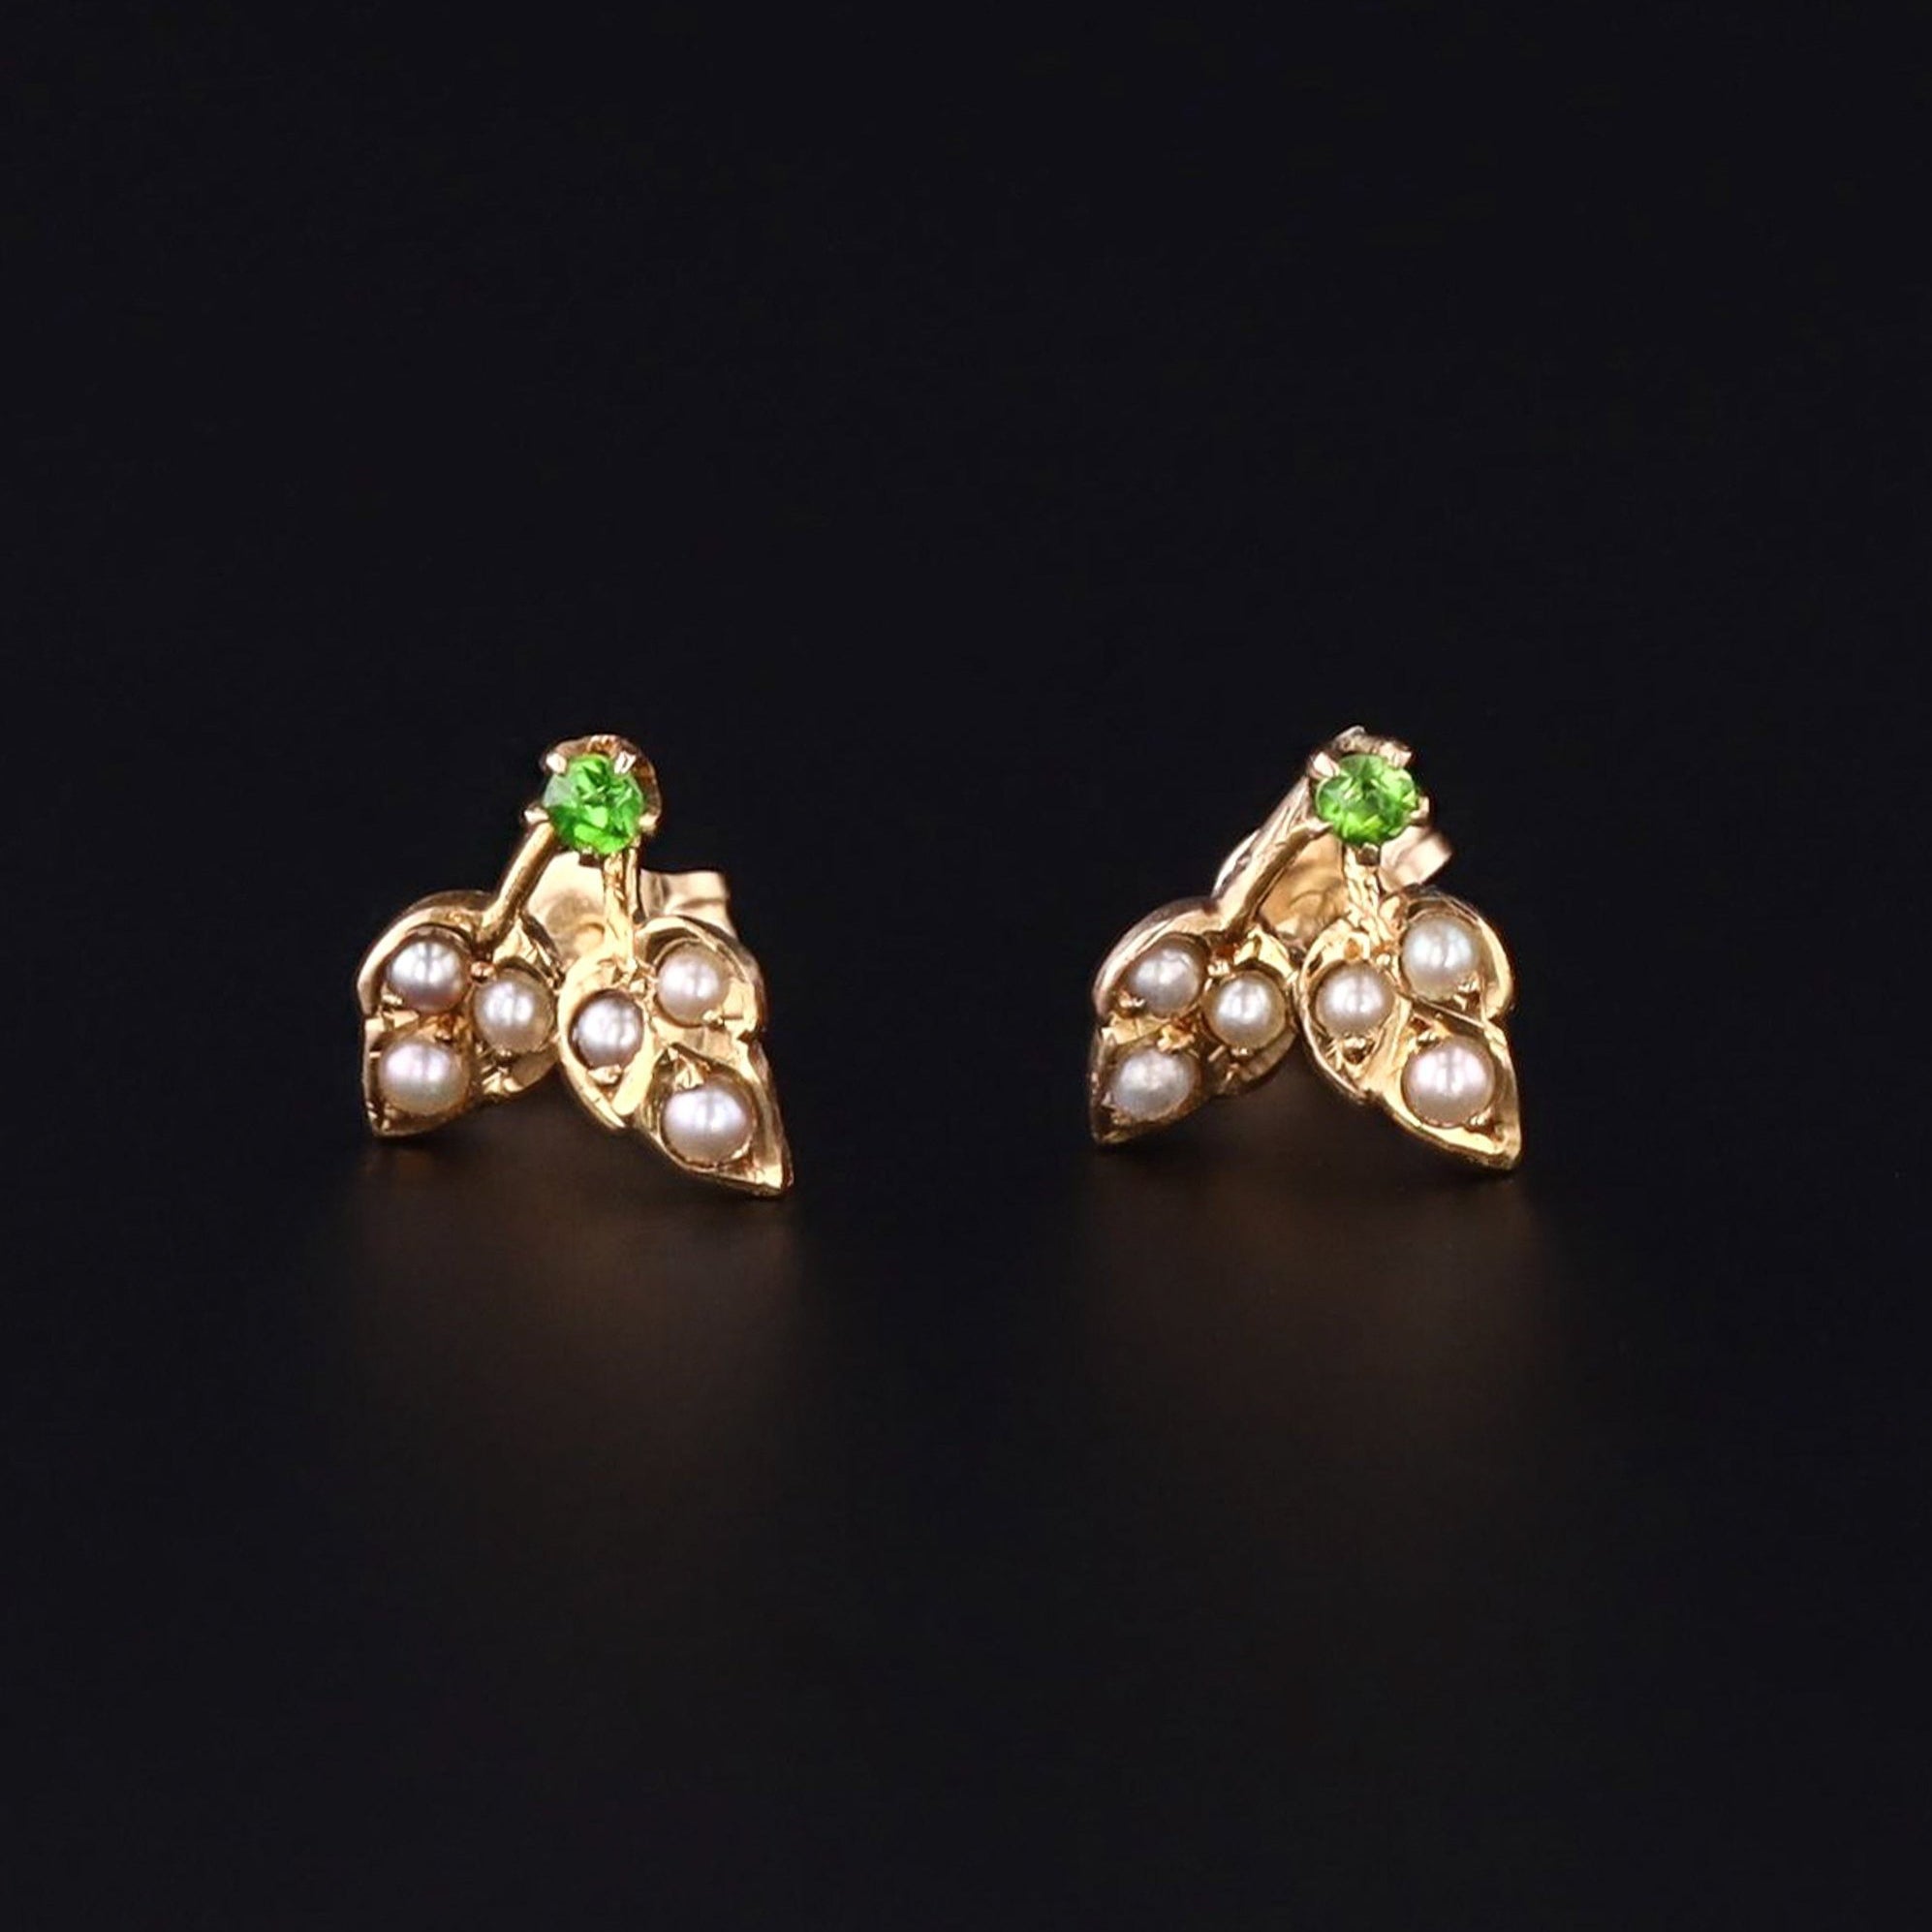 Pearl & Demantoid Garnet Flower Earrings | Antique Pin Conversion Earrings 